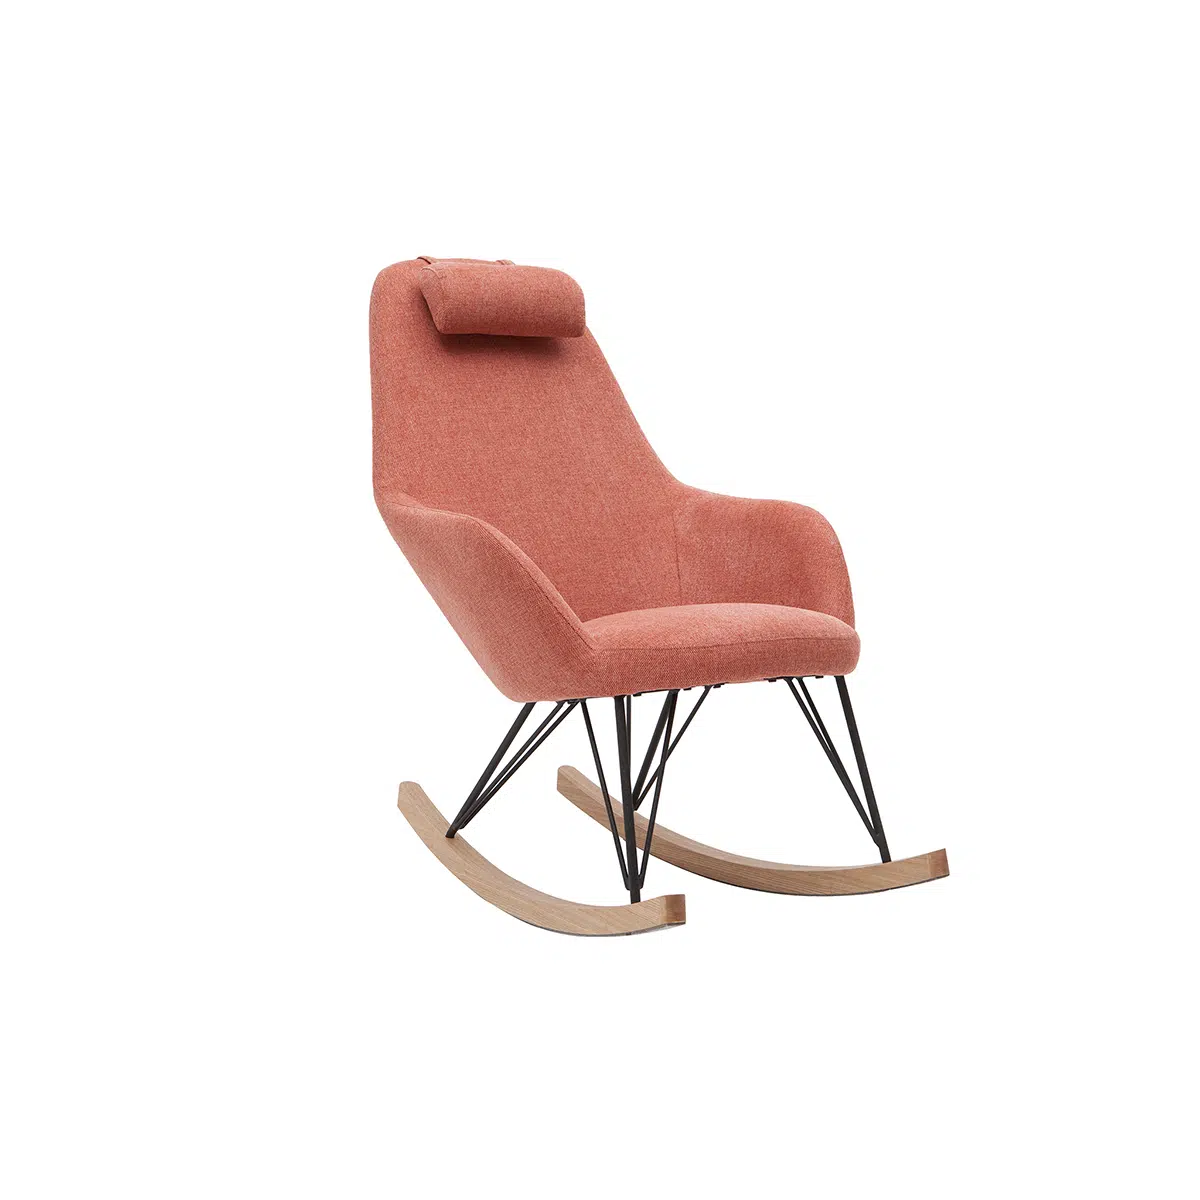 Rocking chair scandinave en tissu effet velours texturé terracotta